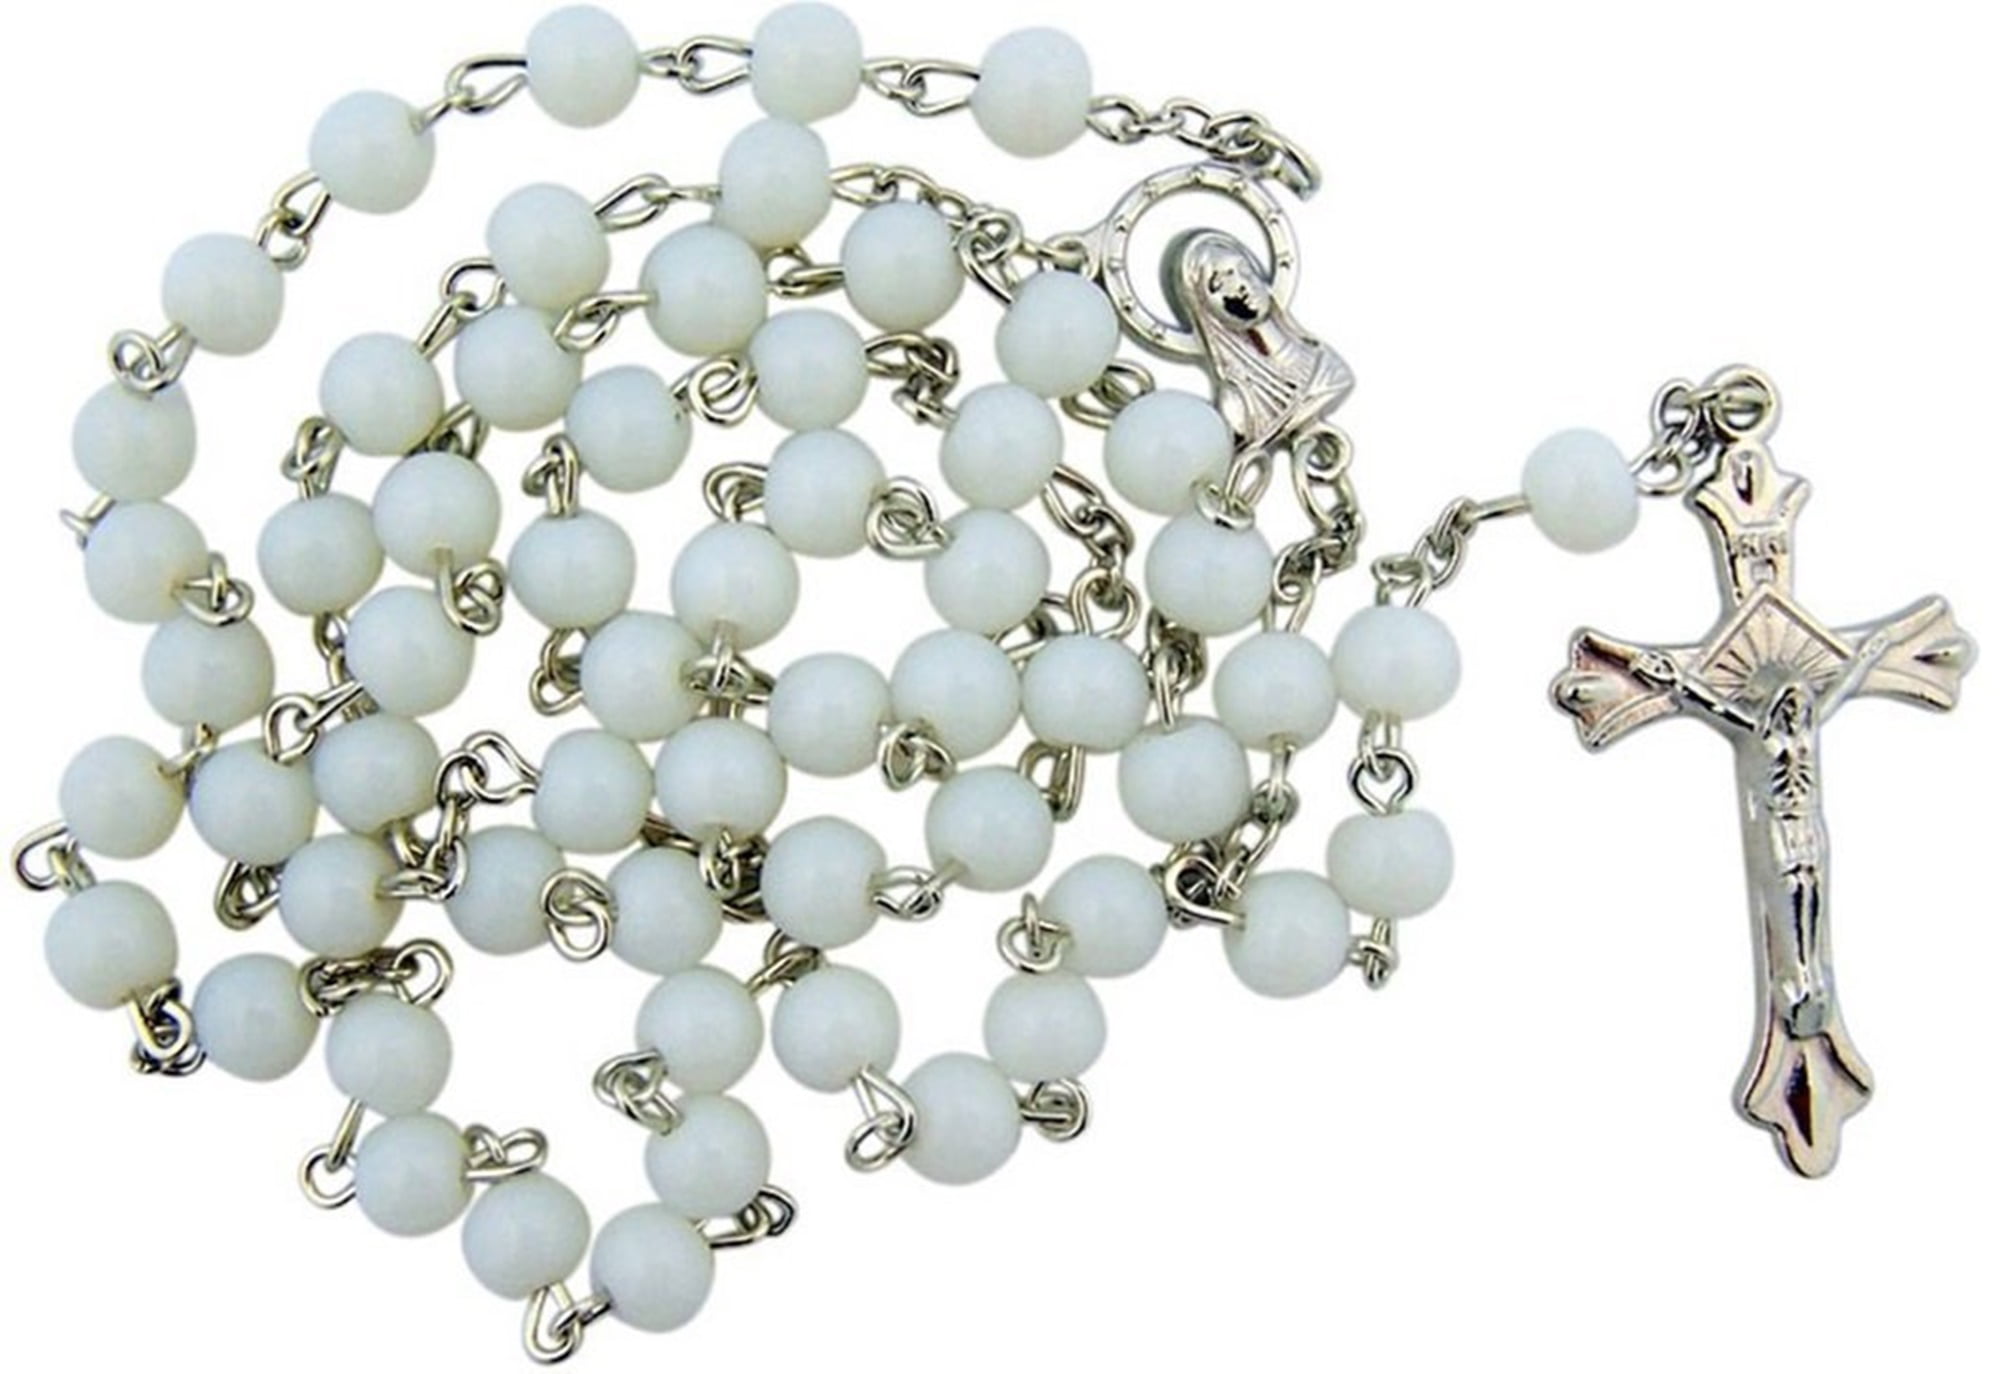 Catholic Rosaries White Acrylic Prayer Bead Rosary With Madonna Centerpiece 20 Inch Walmart